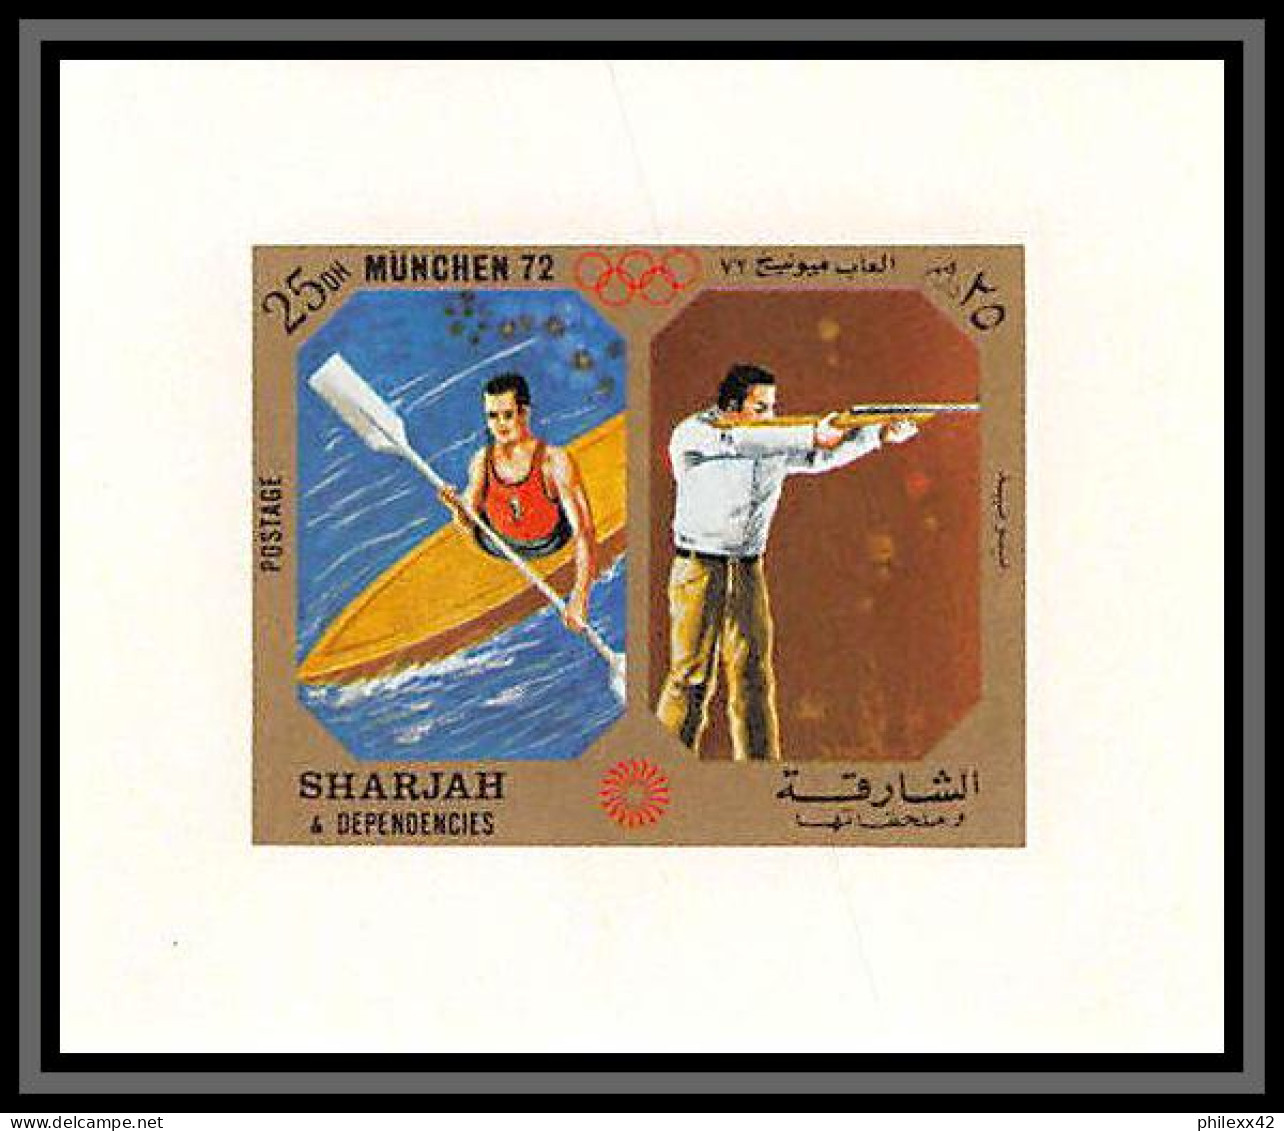 Sharjah - 2195/ N°946 Kayak Shooting Tir Munich 1972 Jeux Olympiques Olympic Games Miniature Deluxe Sheet Neuf ** MNH - Sharjah